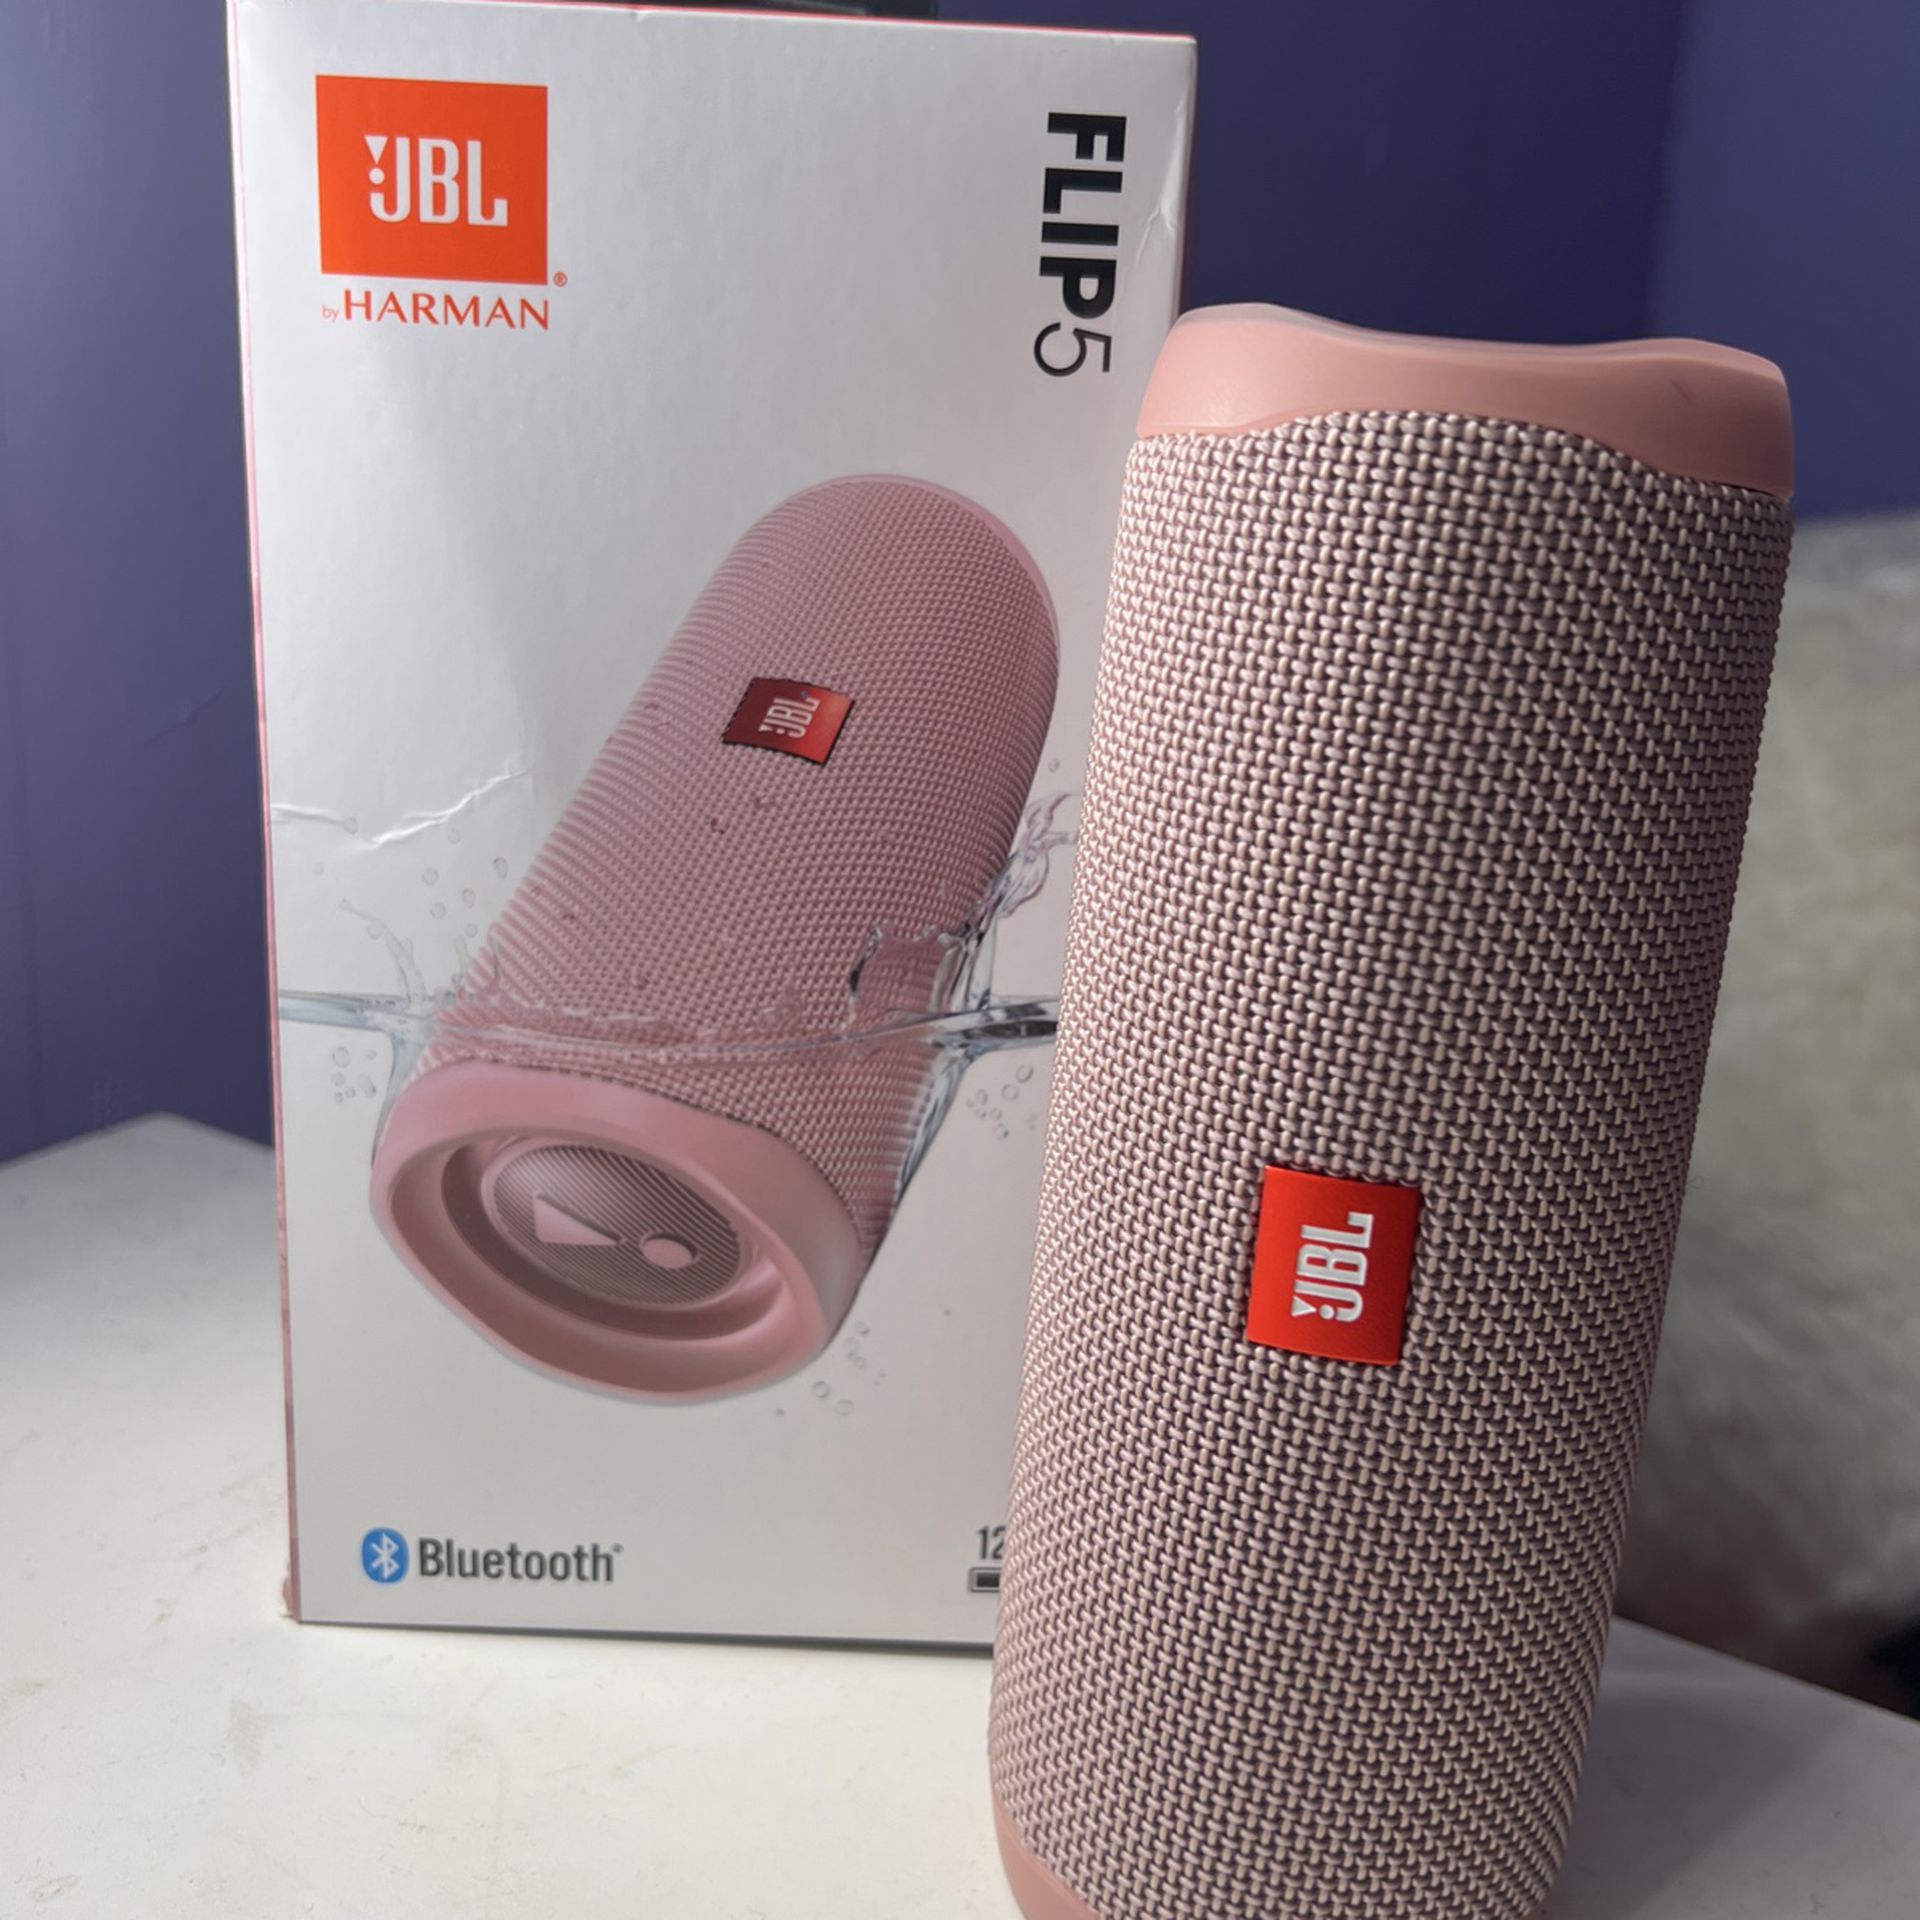 JBL 5 Pink Bluetooth for Sale in Chula Vista, CA - OfferUp